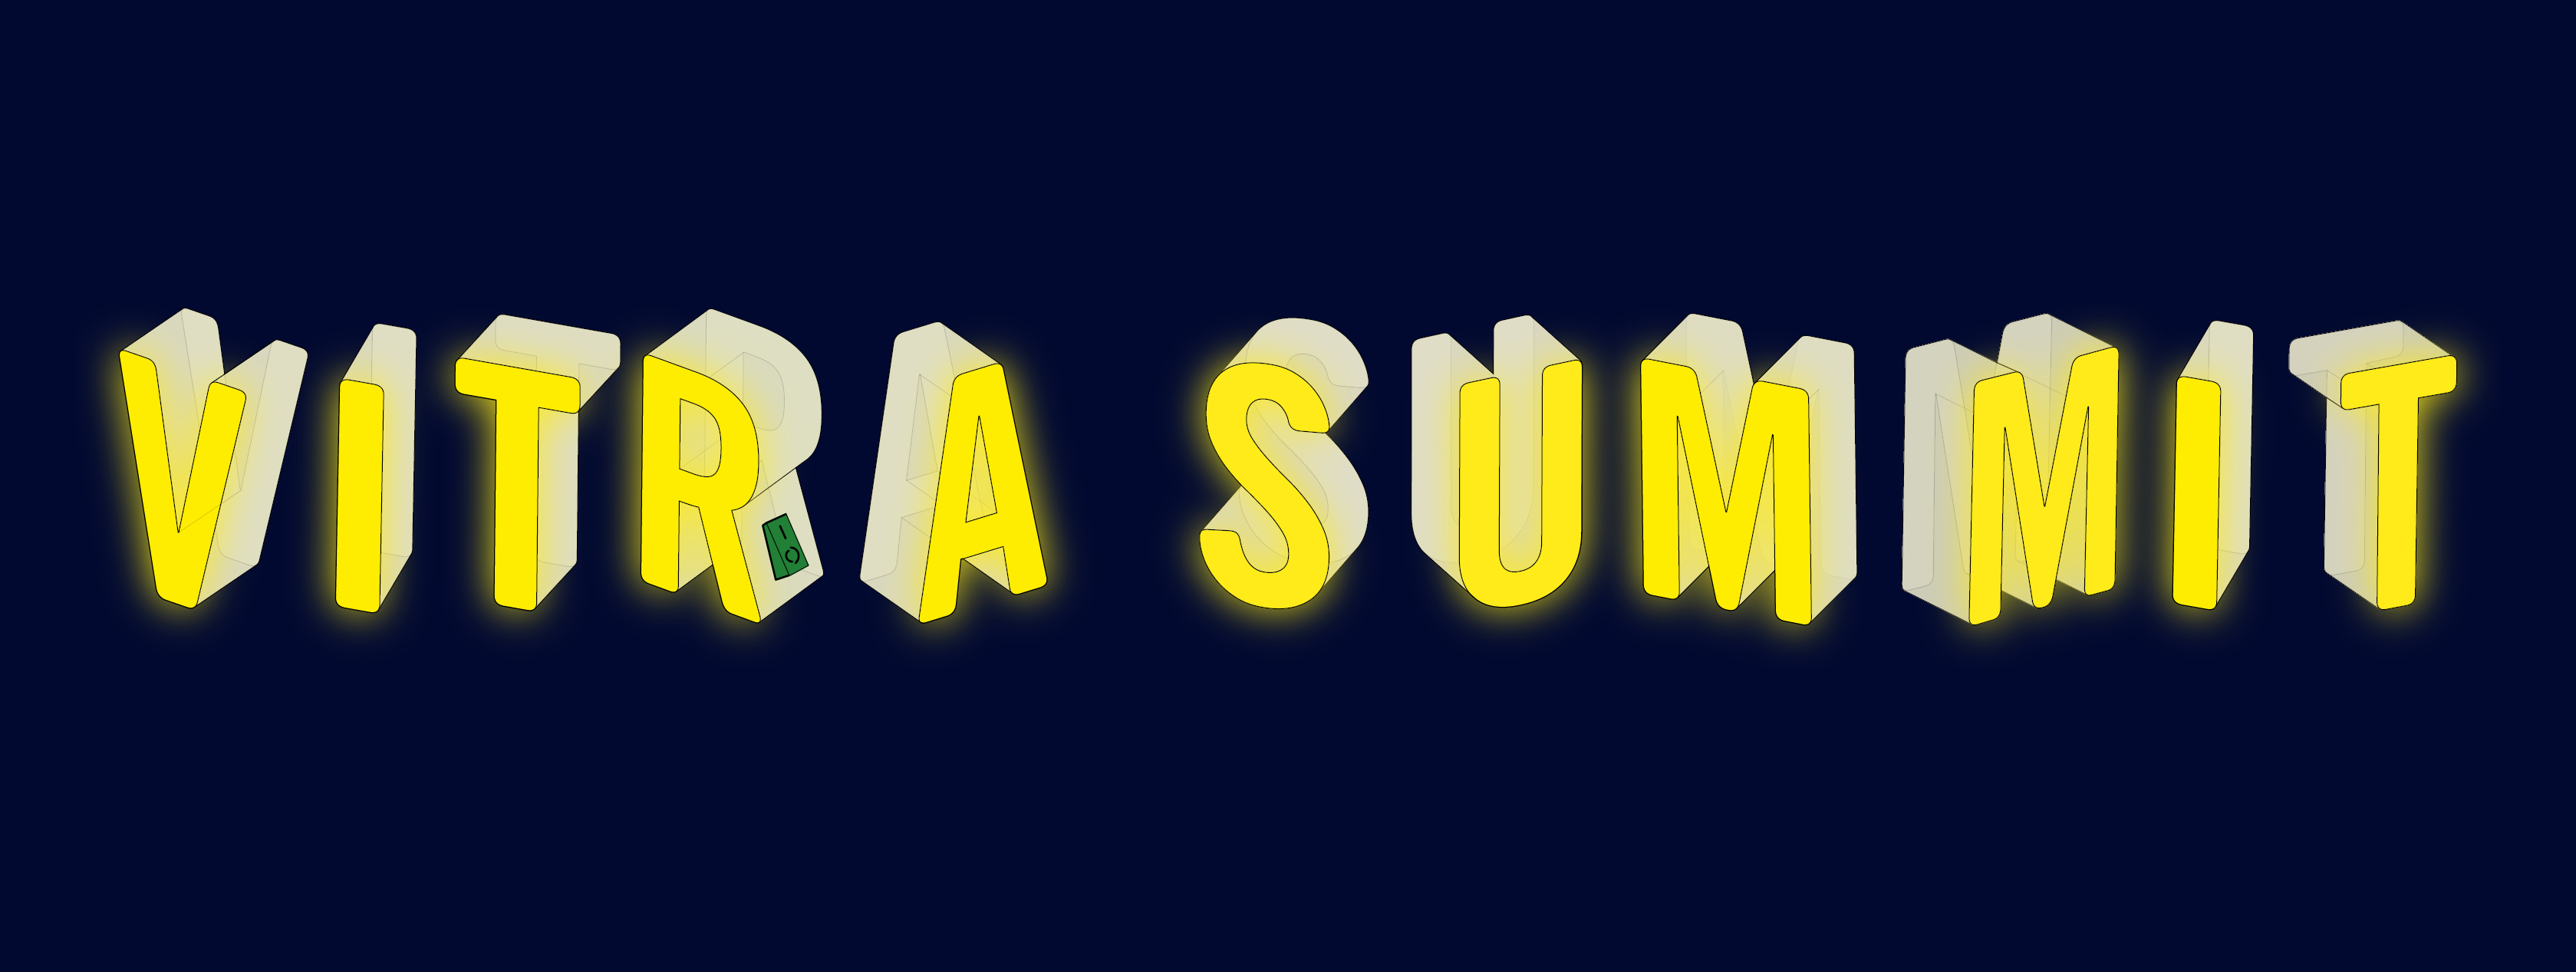 Vitra Summit 2020